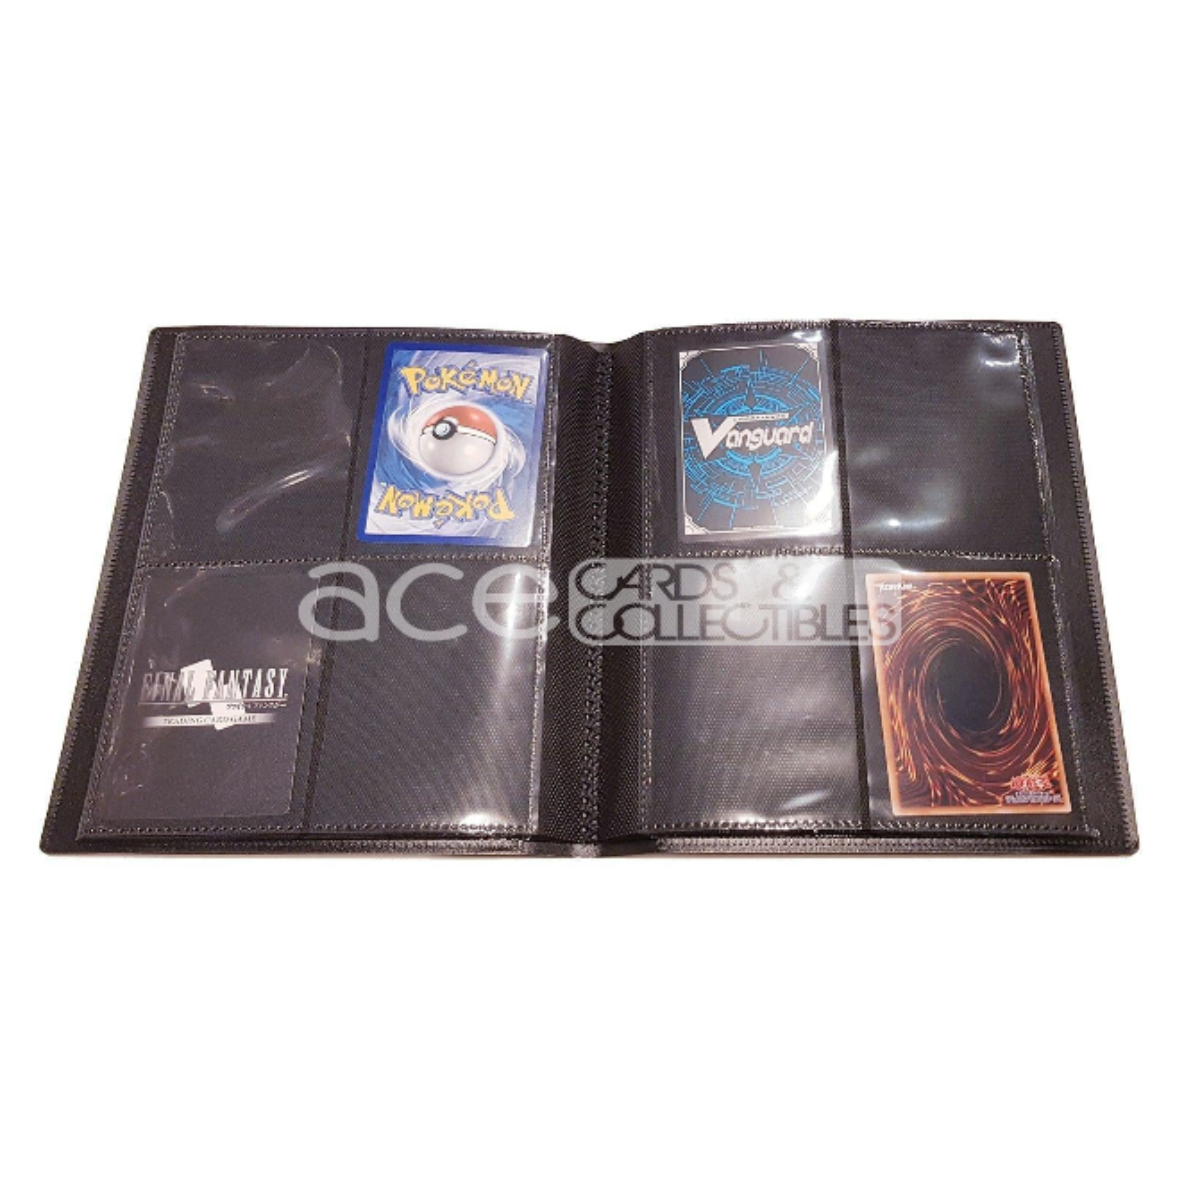 Ultra PRO Album PRO-Binder Eclipse 4-pocket-Jet Black-Ultra PRO-Ace Cards &amp; Collectibles